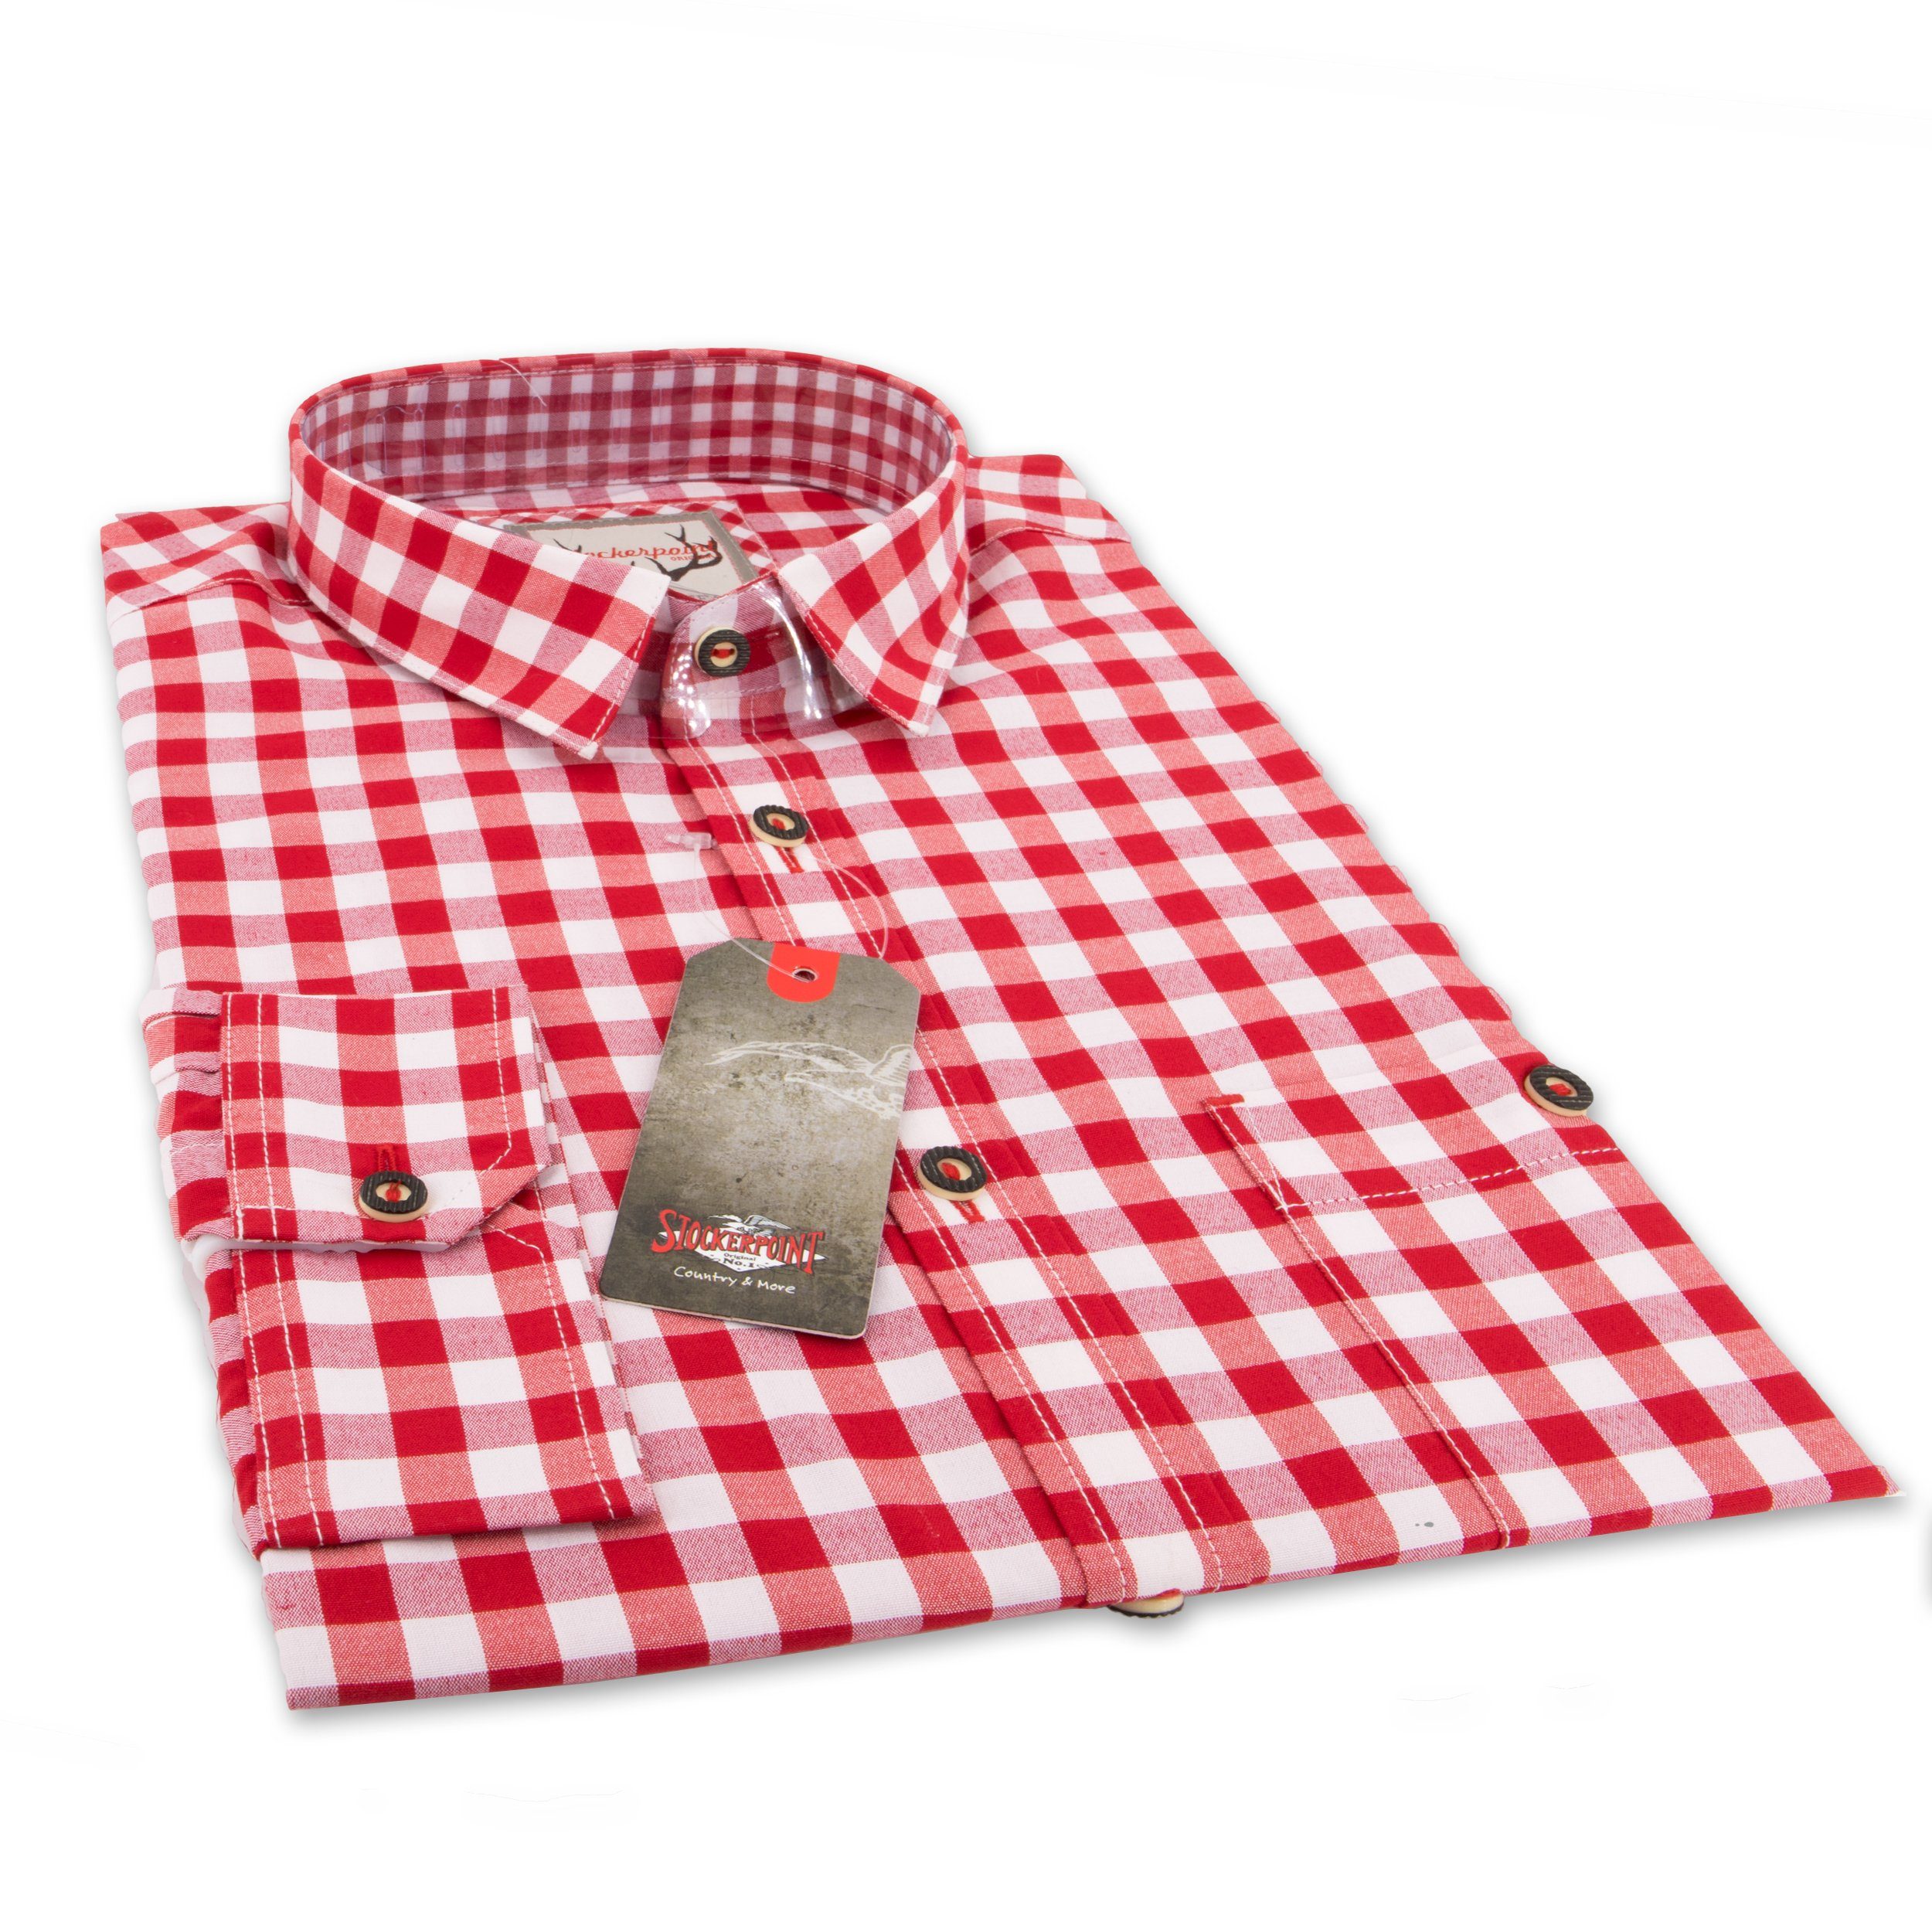 Stockerpoint Trachtenhemd Trachtenhemd OC-Franzl, kariert, modern Fit Rot